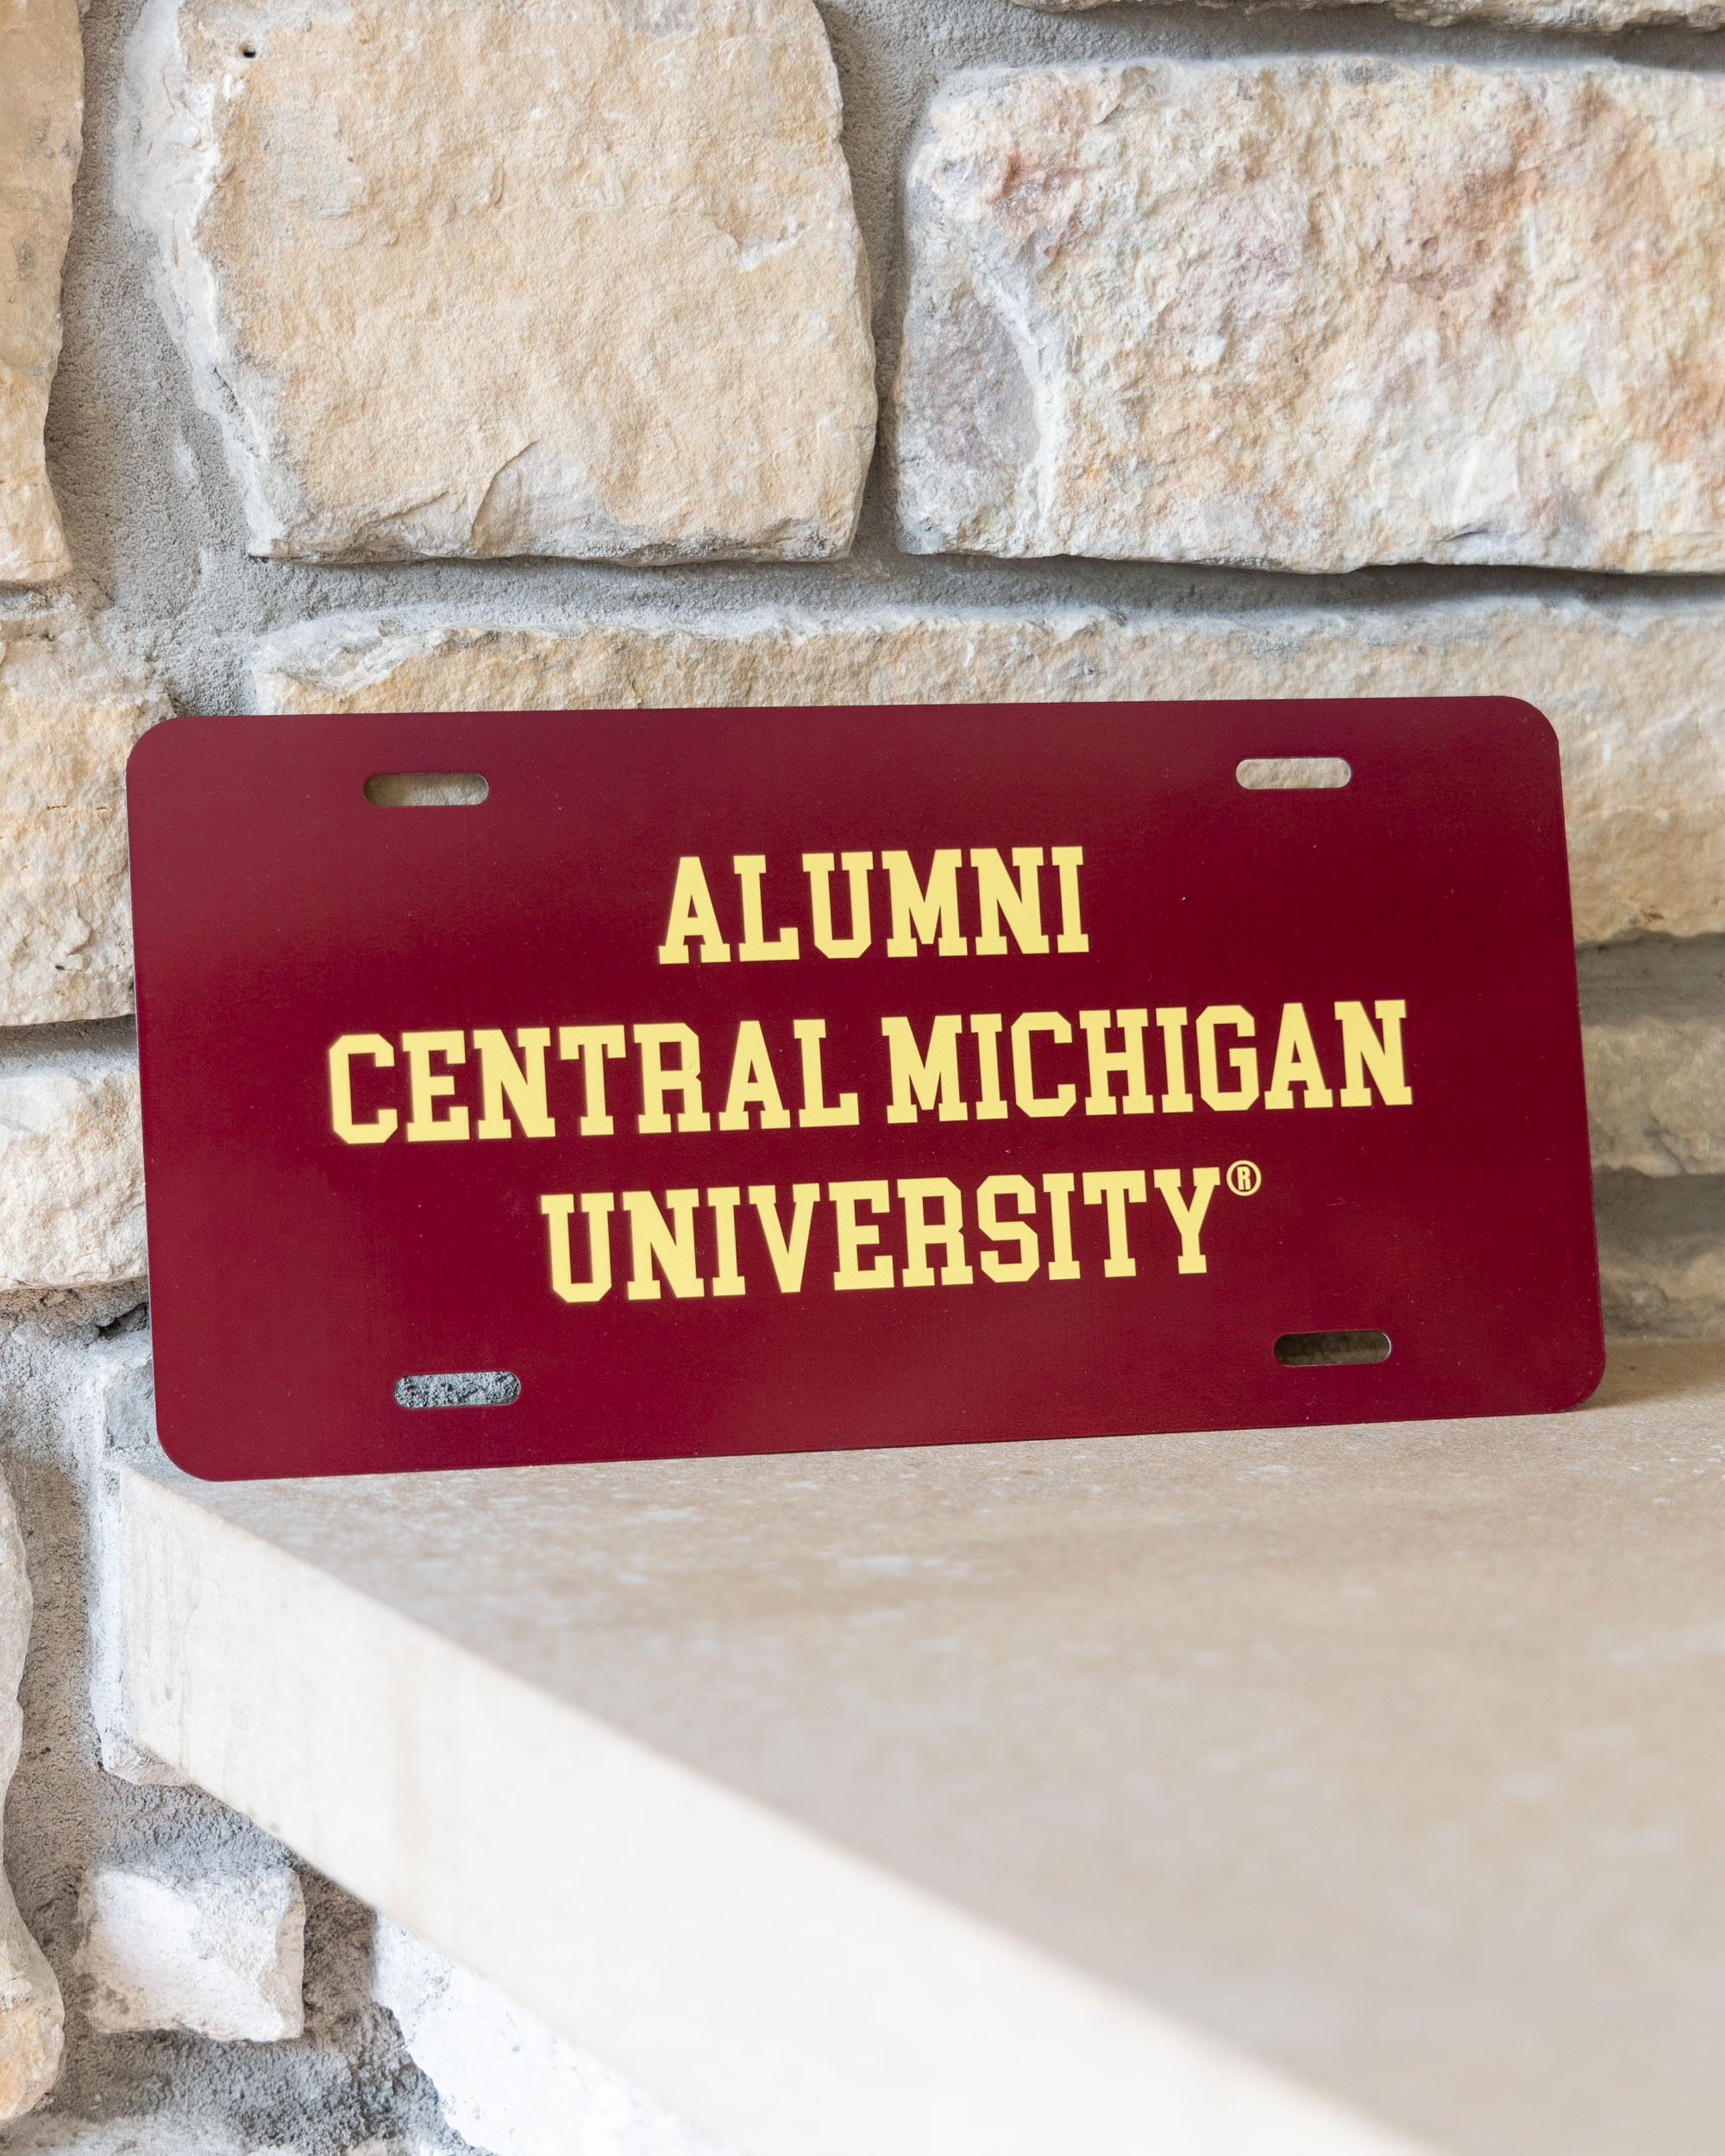 Alumni Central Michigan University Vanity Plate (SKU 5054224698)